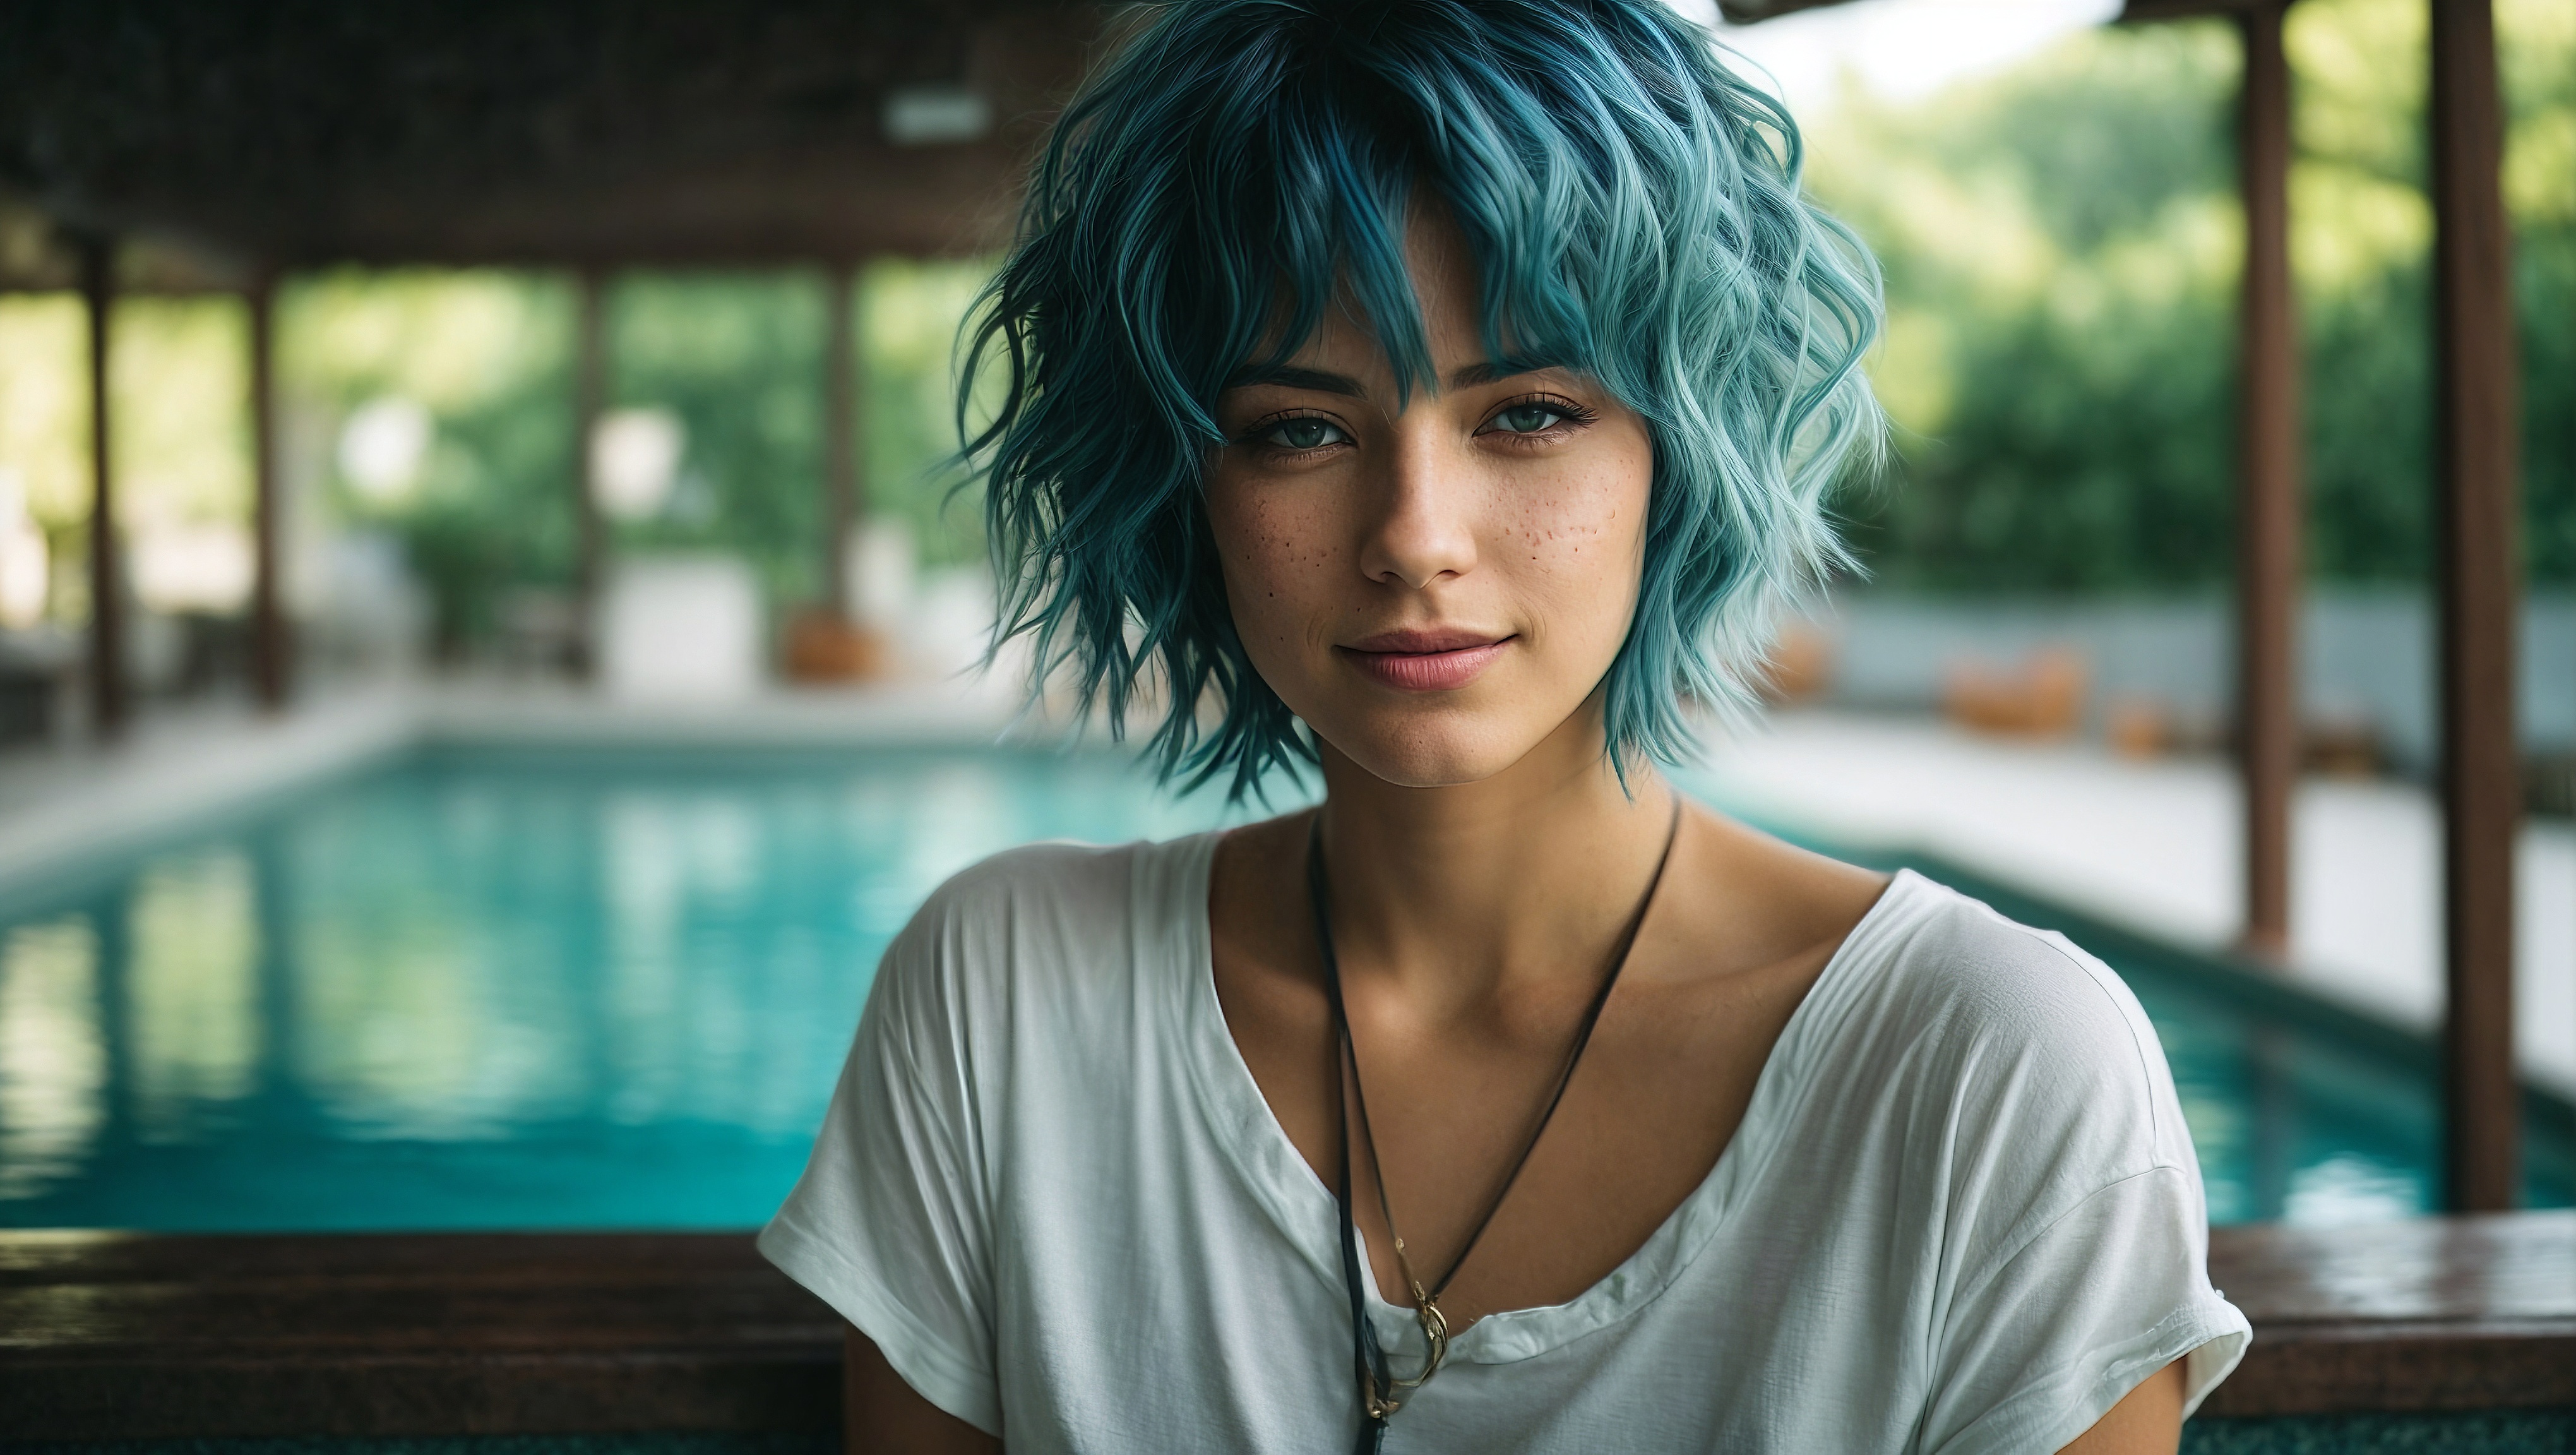 A woman with blue hair near a pool